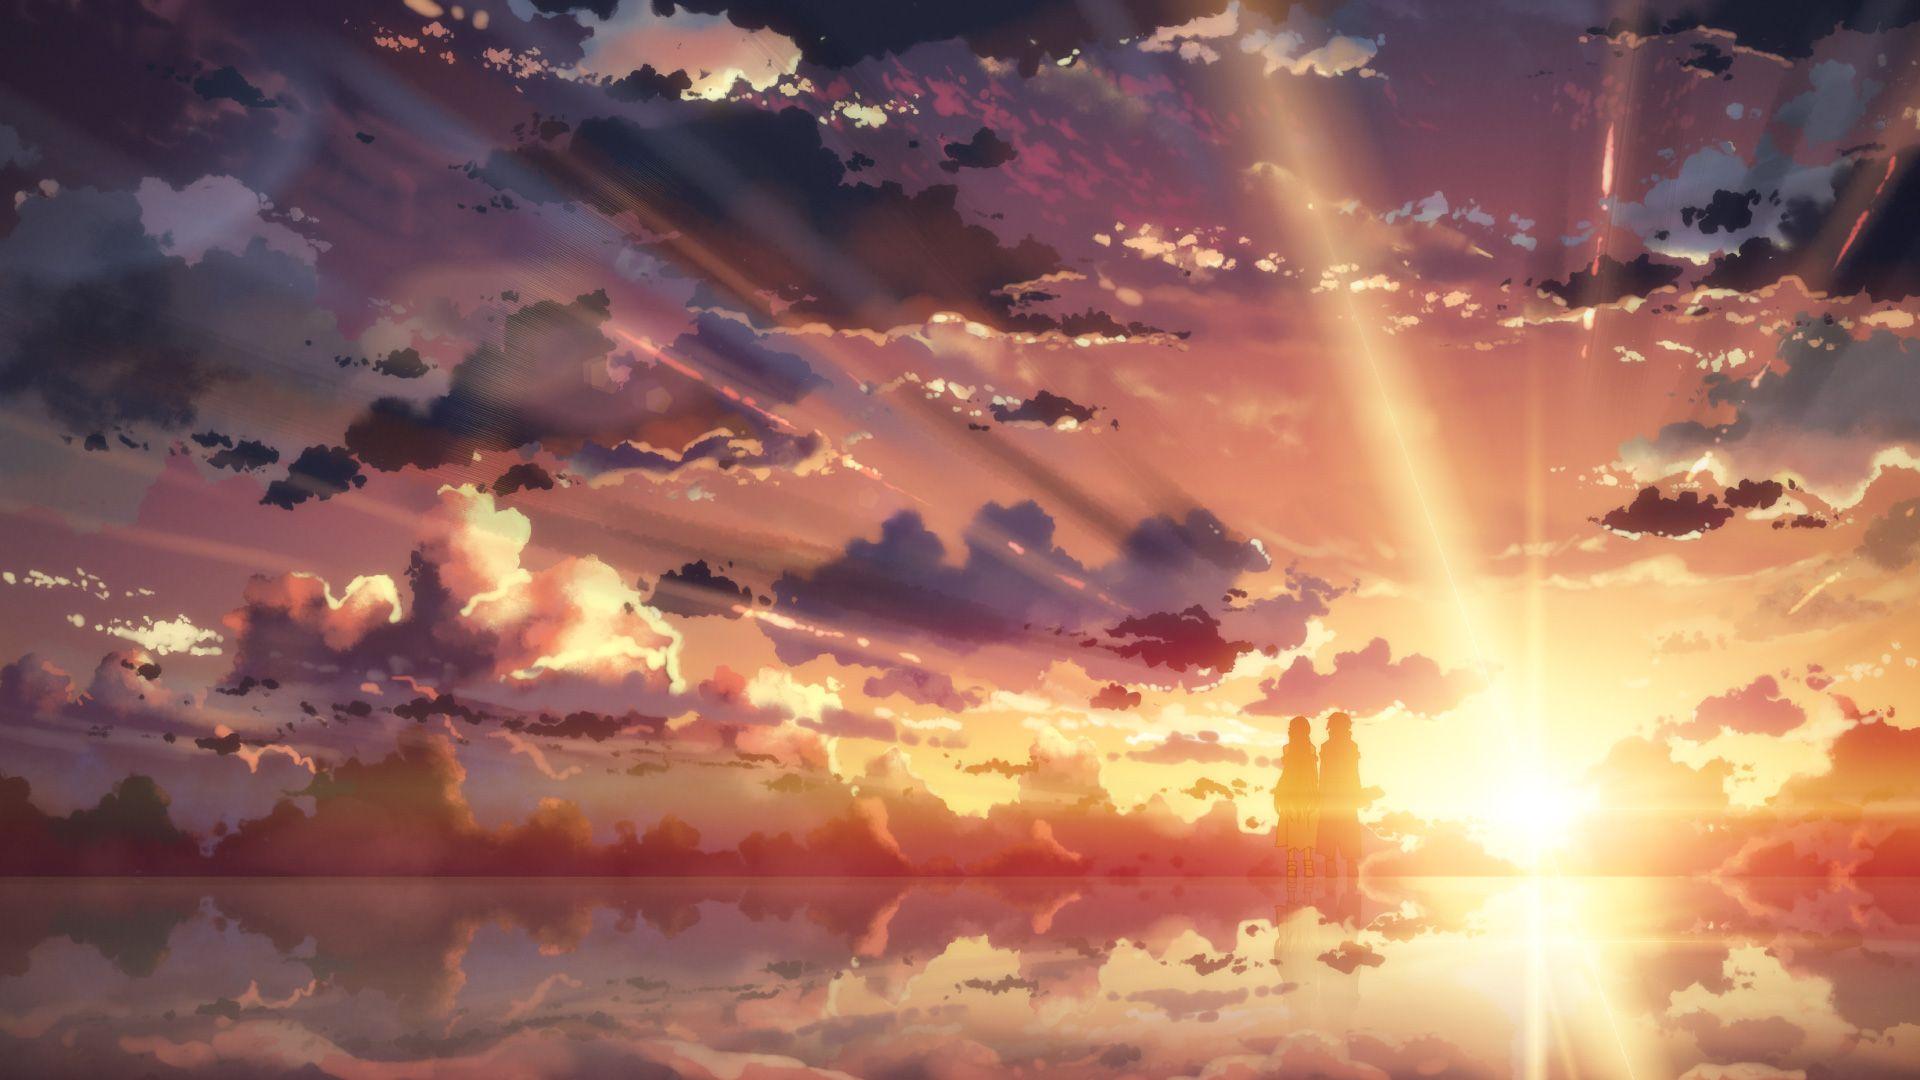 Anime Sunset Wallpapers - Top Hình Ảnh Đẹp